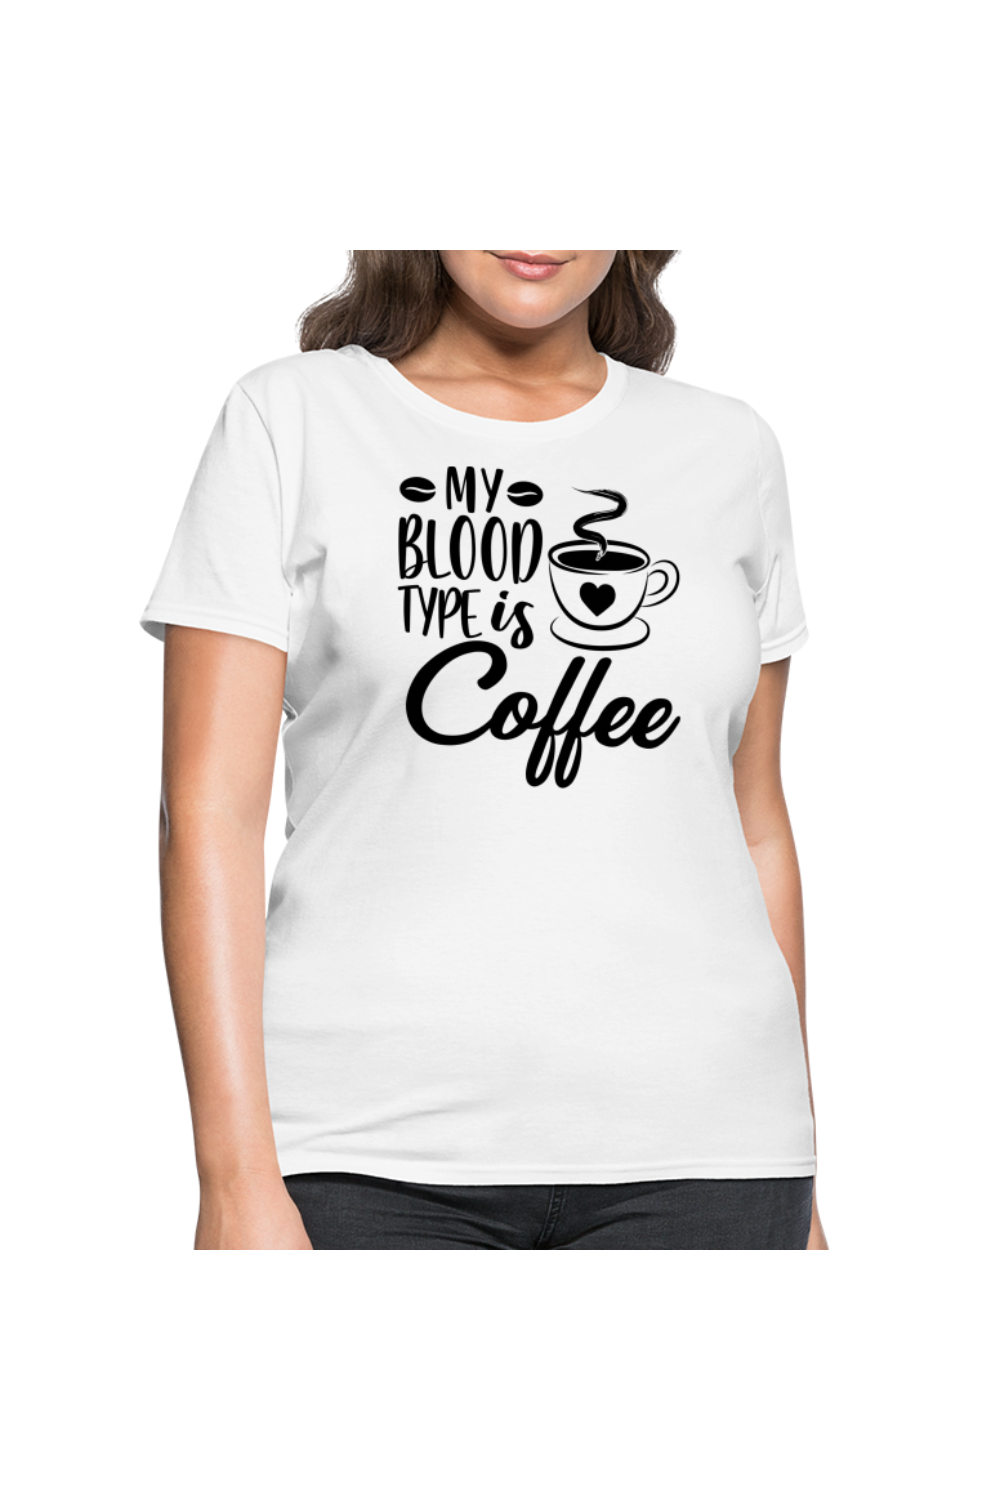 My Blood Type Is Coffee Women's Nurse T-Shirt - white